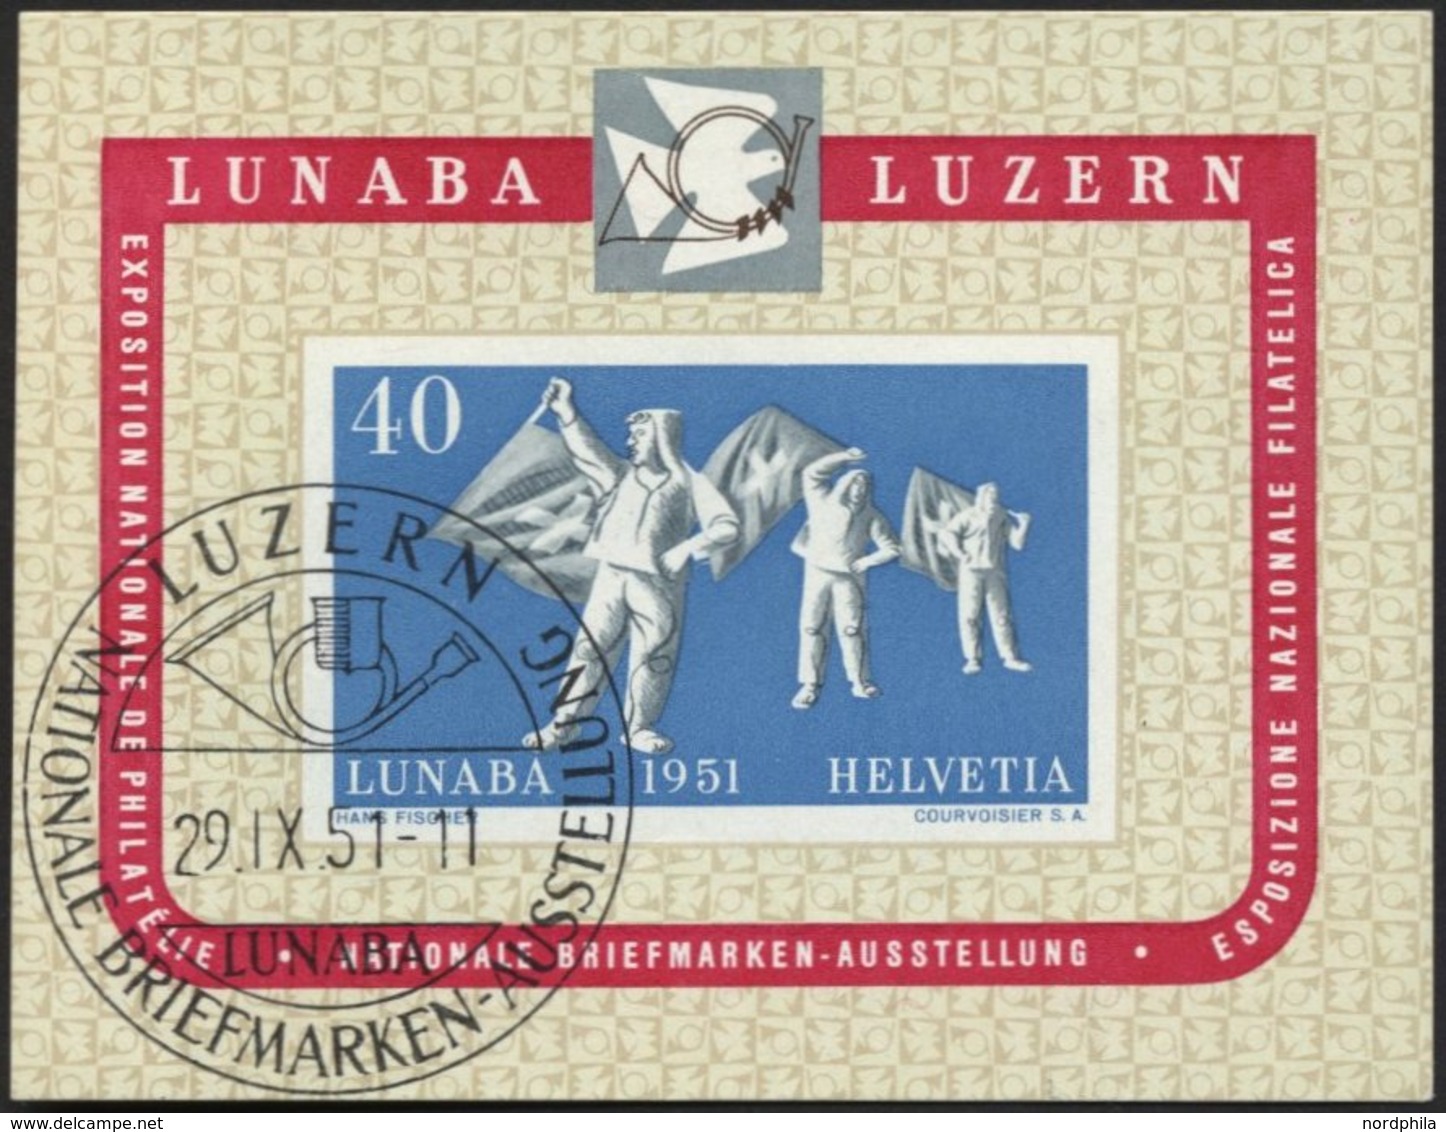 SCHWEIZ BUNDESPOST Bl. 14 O, 1951, Block LUNABA, Ersttags-Sonderstempel, Pracht, Mi. (200.-) - 1843-1852 Poste Federali E Cantonali